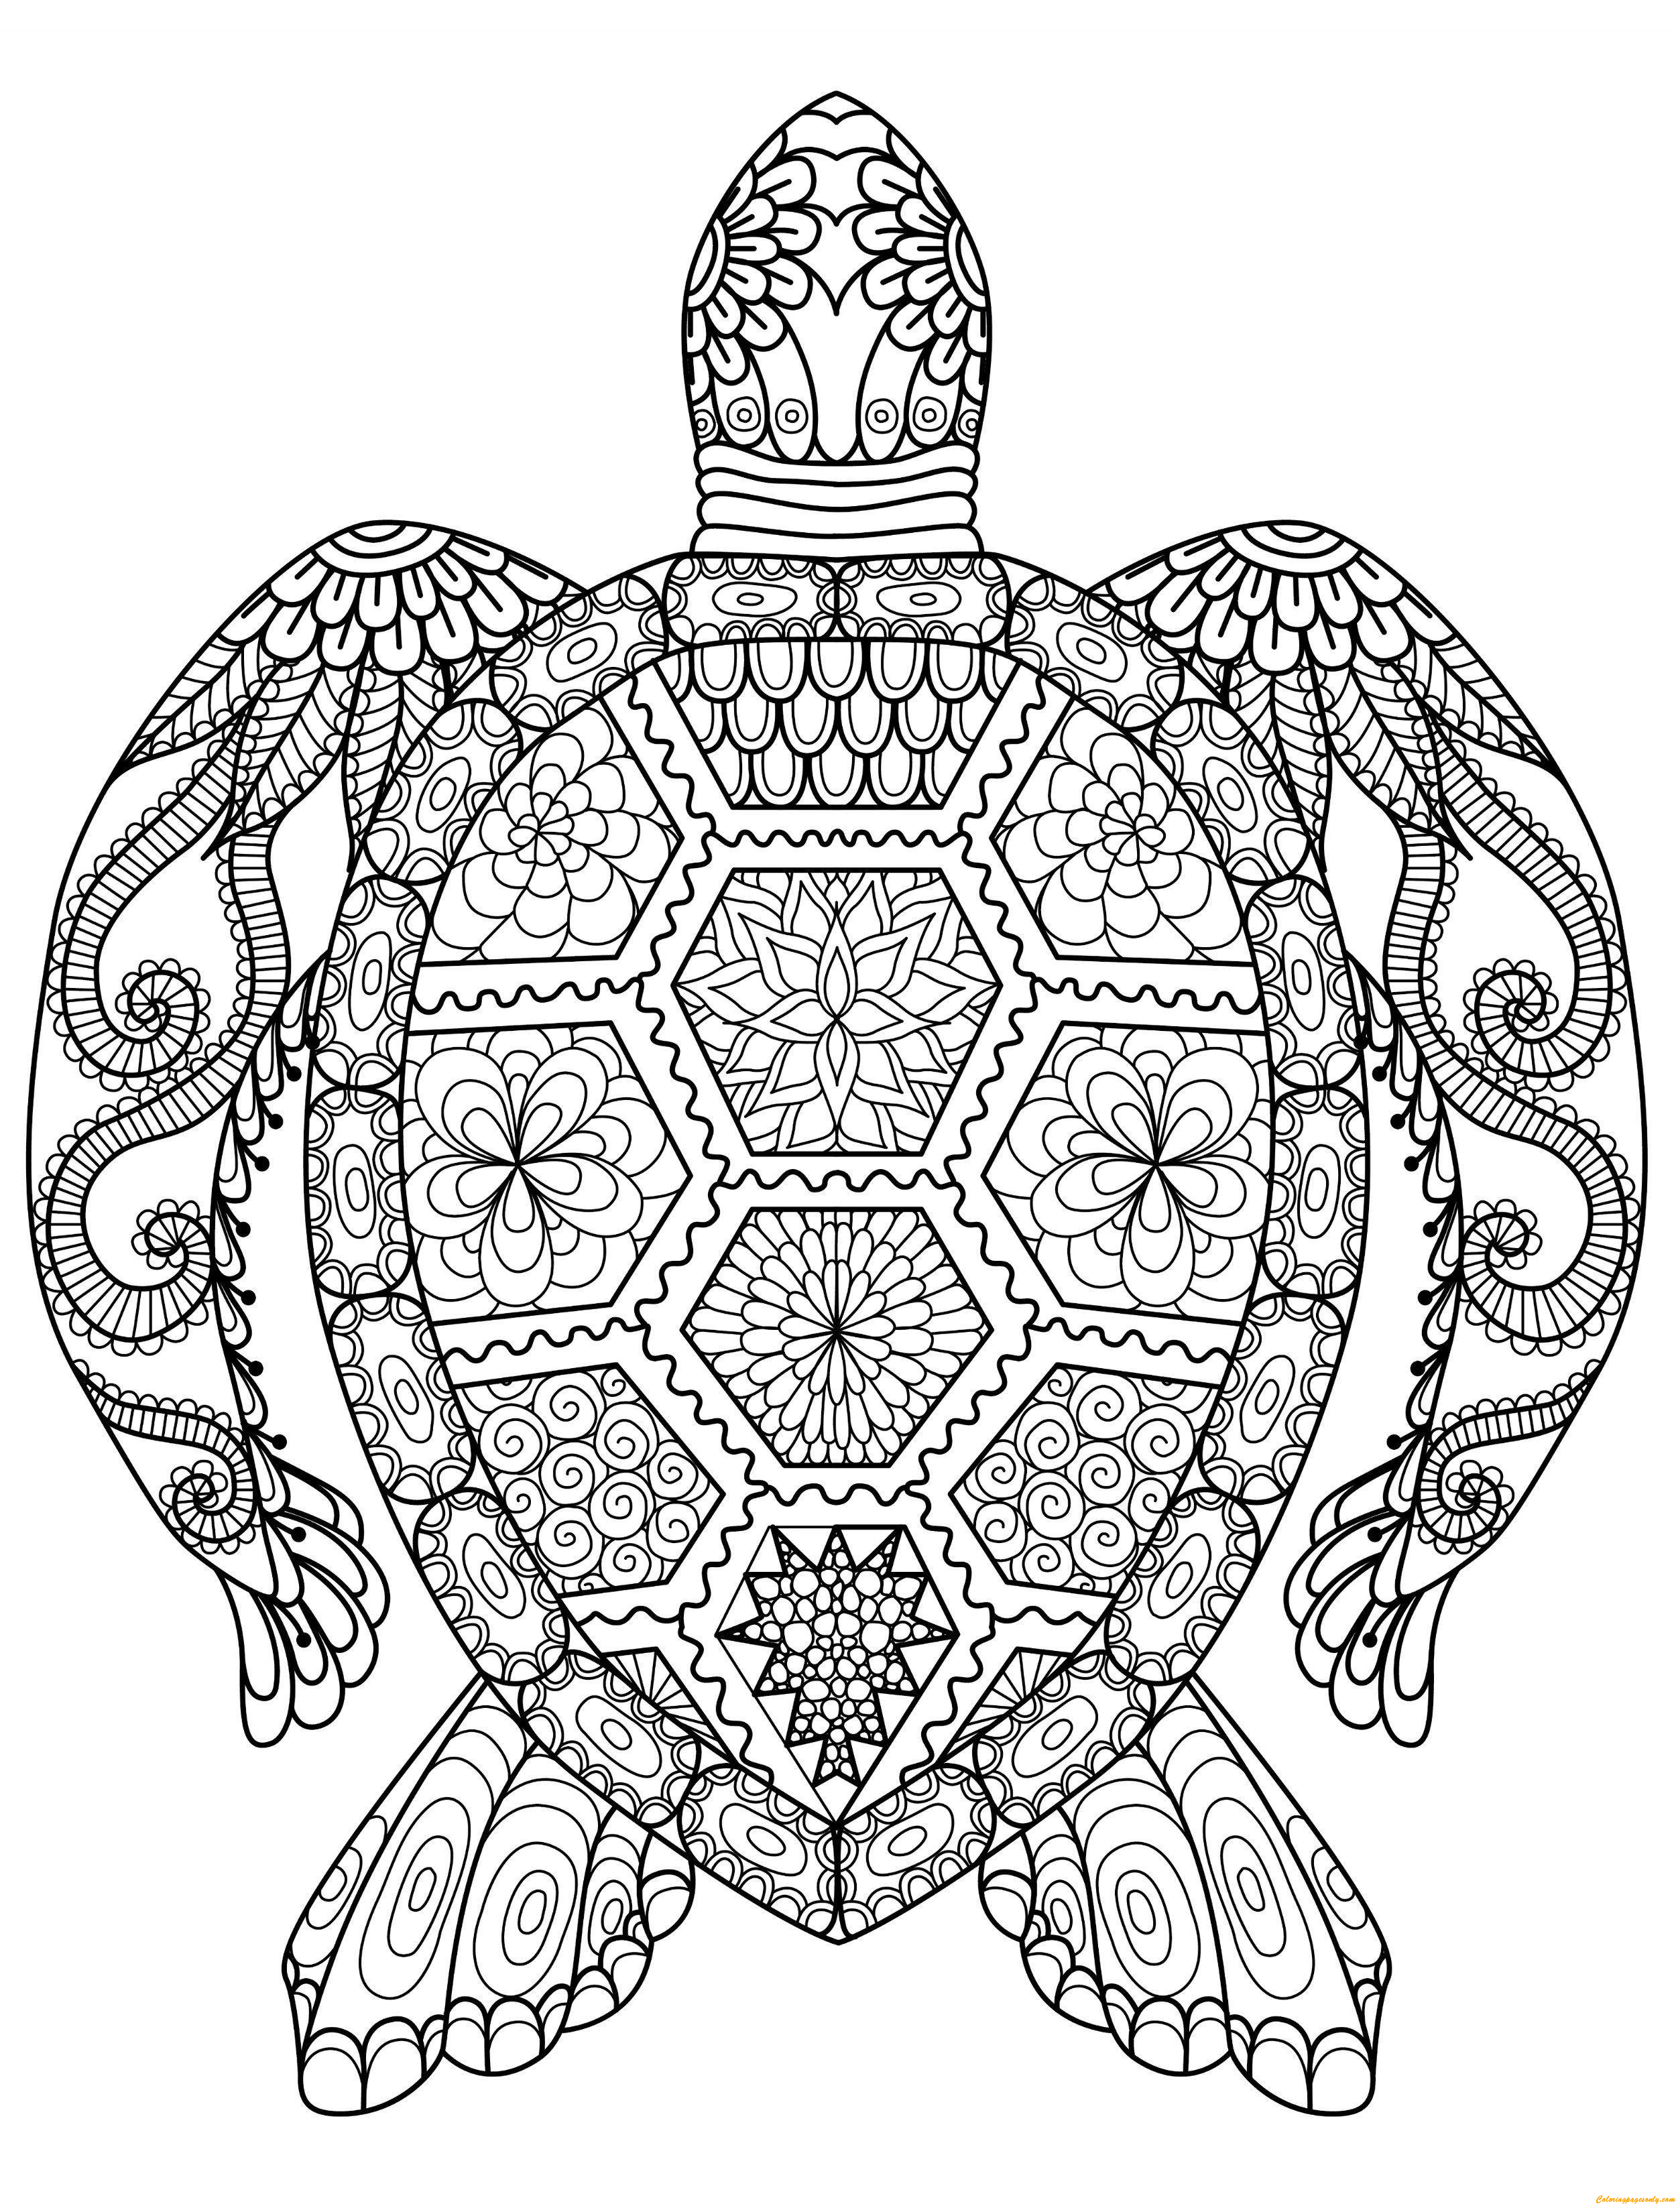 Декоративная черепаха из Харда